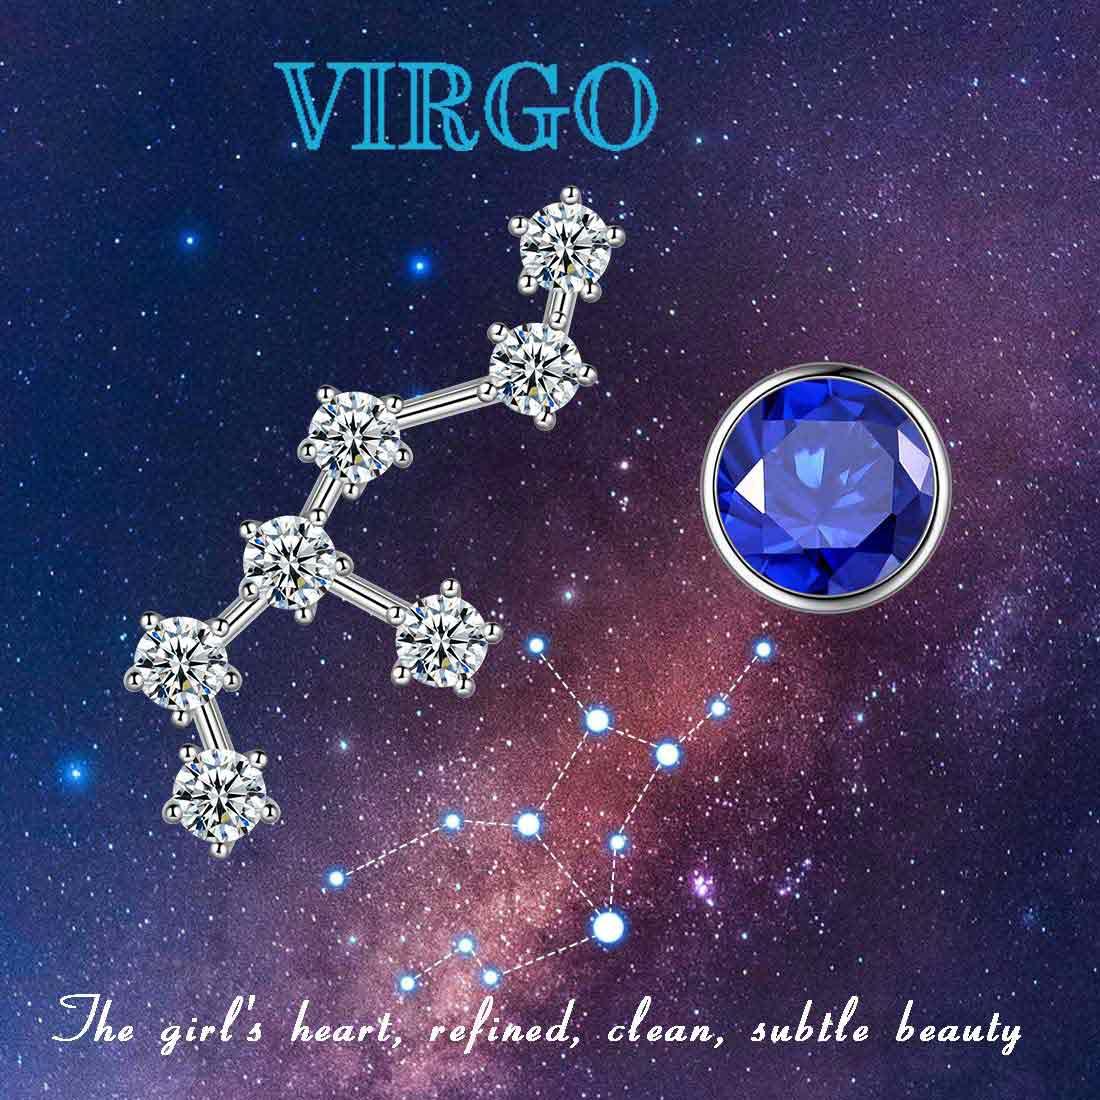 Virgo Earrings September Birthstone Zodiac Studs - Earrings - Aurora Tears